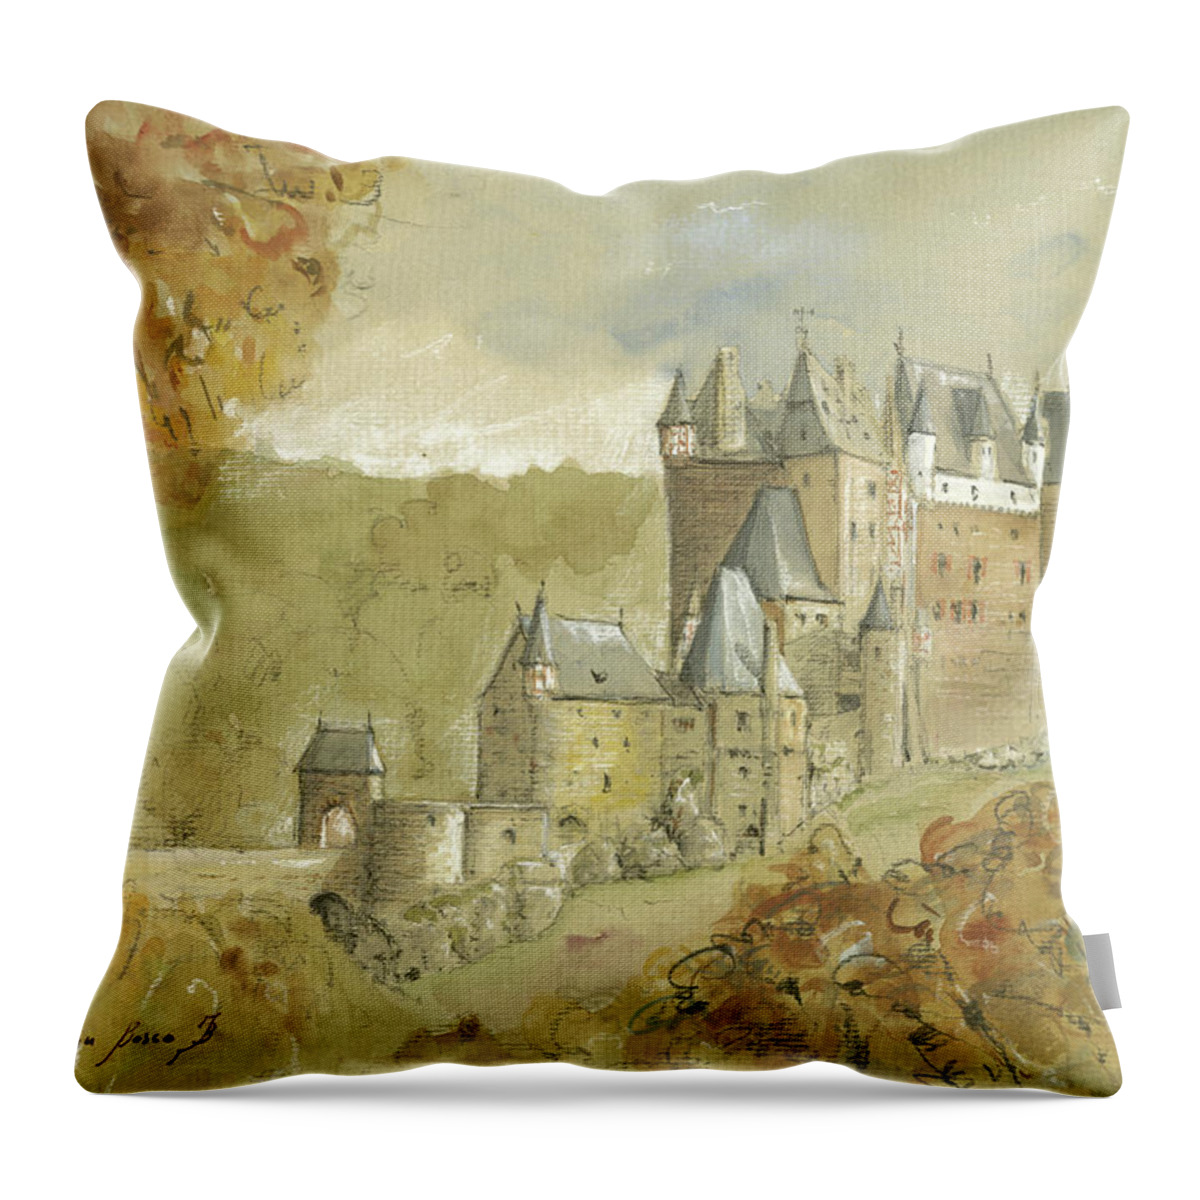 Burg Eltz Art Throw Pillow featuring the painting Burg Eltz castle by Juan Bosco